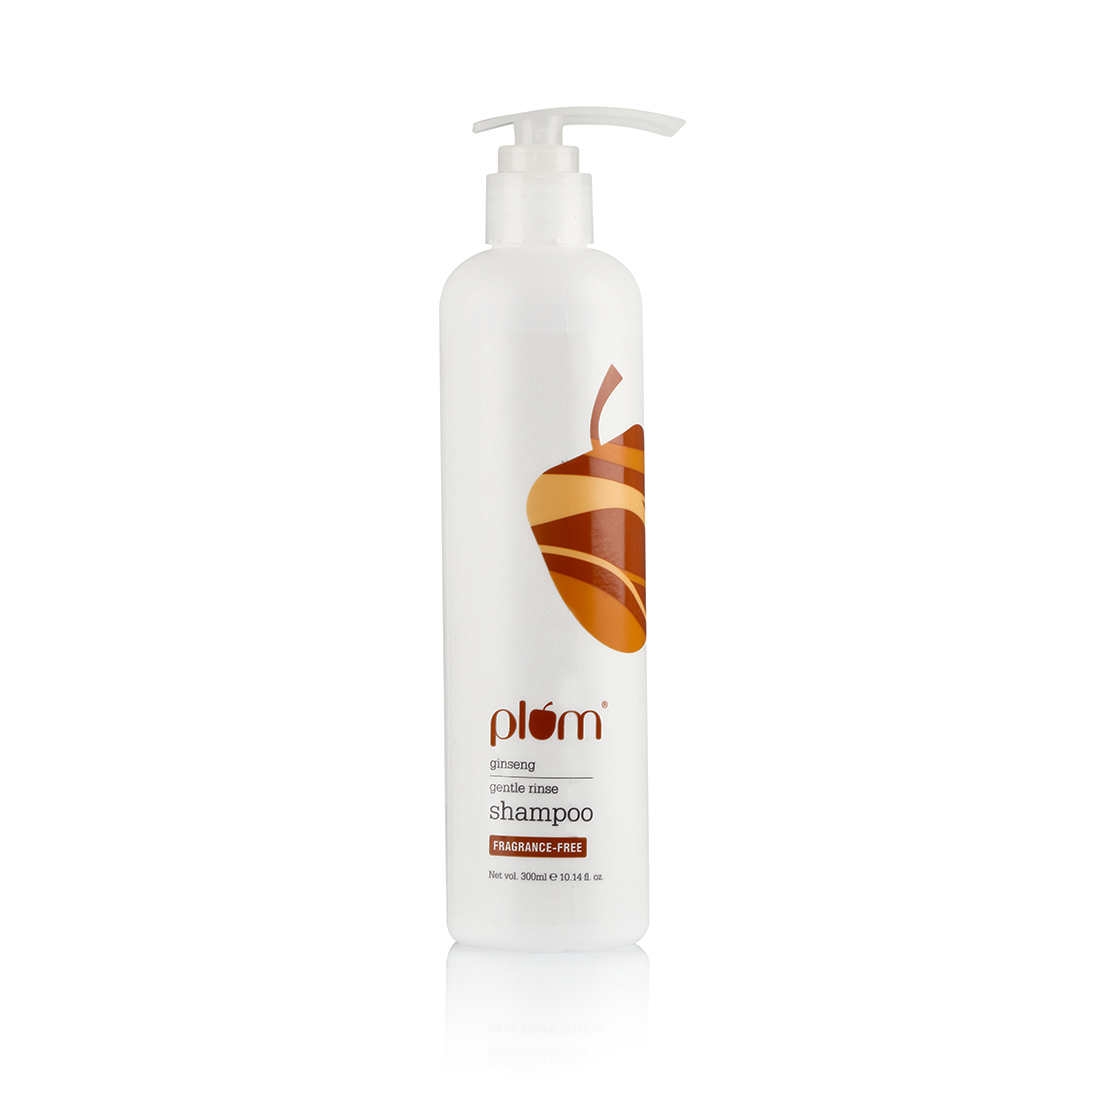 Plum Ginseng Gentle Rinse Shampoo| 300 ml